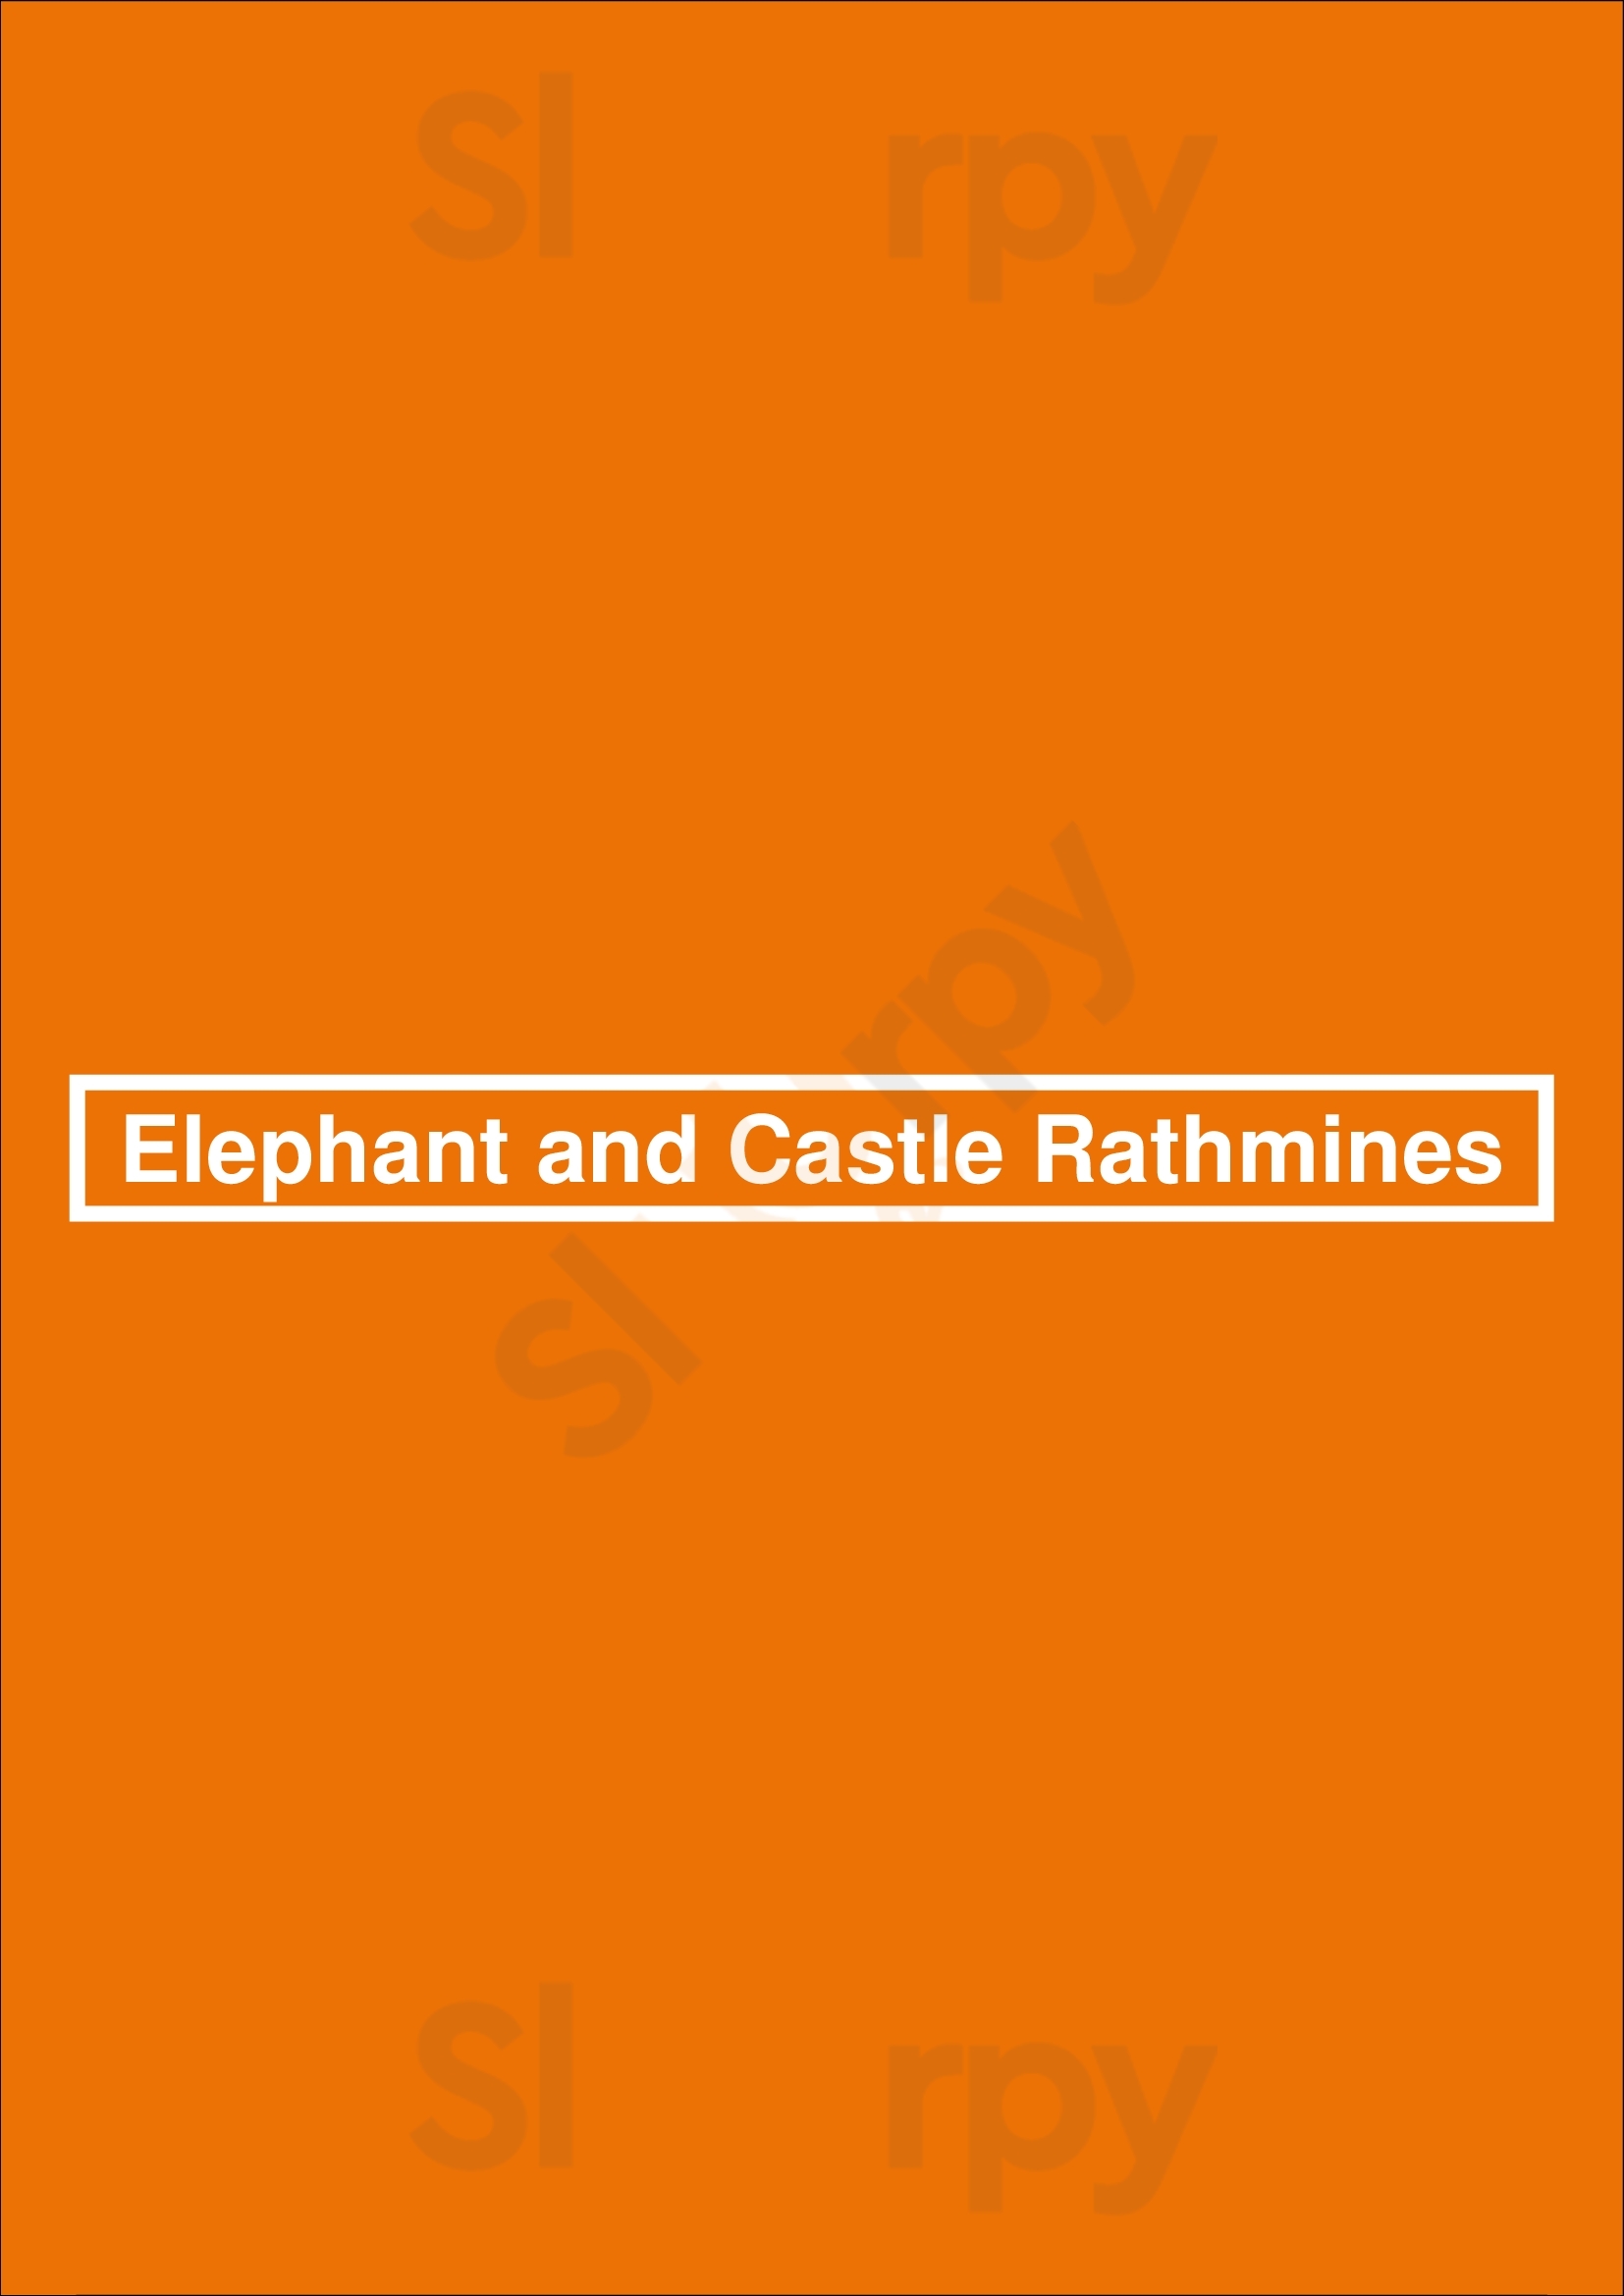 Elephant And Castle Rathmines Dublin Menu - 1